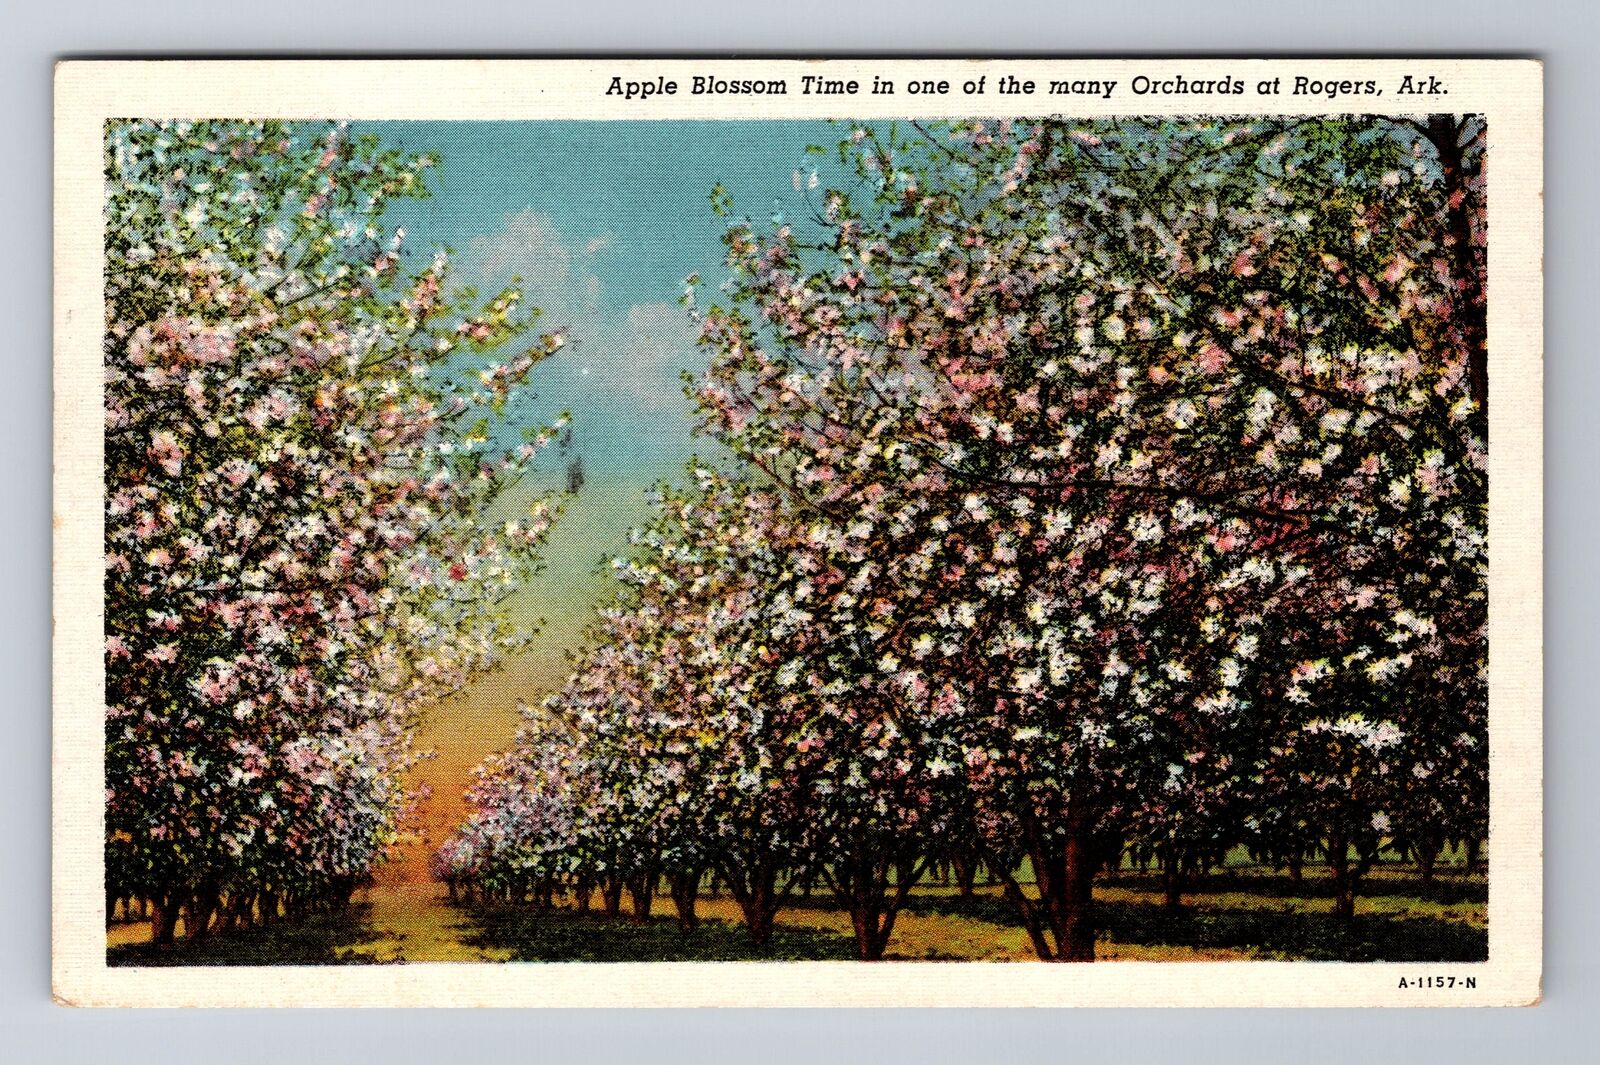 Rogers AR-Arkansas, Apple Blossom in Orchard, Antique Vintage Postcard